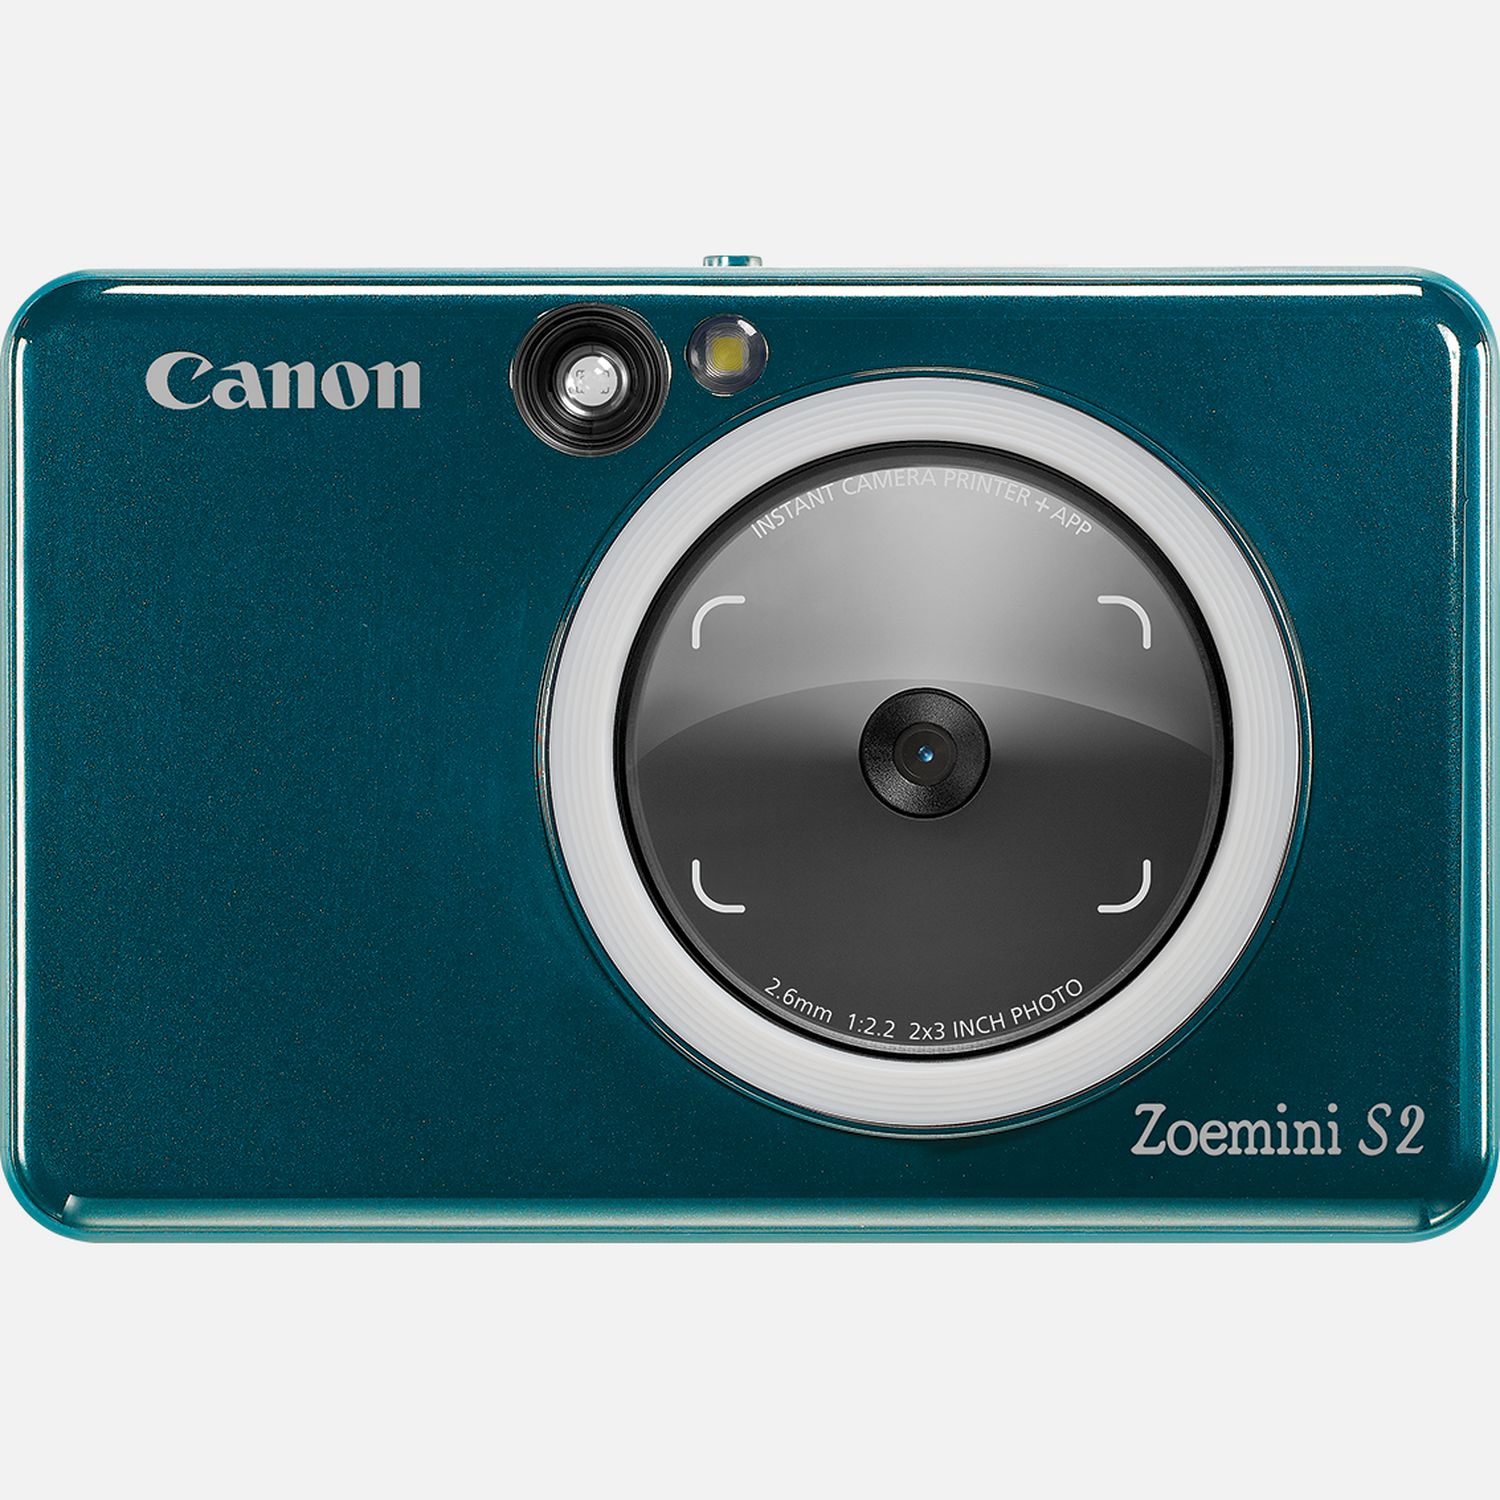 Imprimante photo couleur portable Canon Zoemini 2, bleu marine +